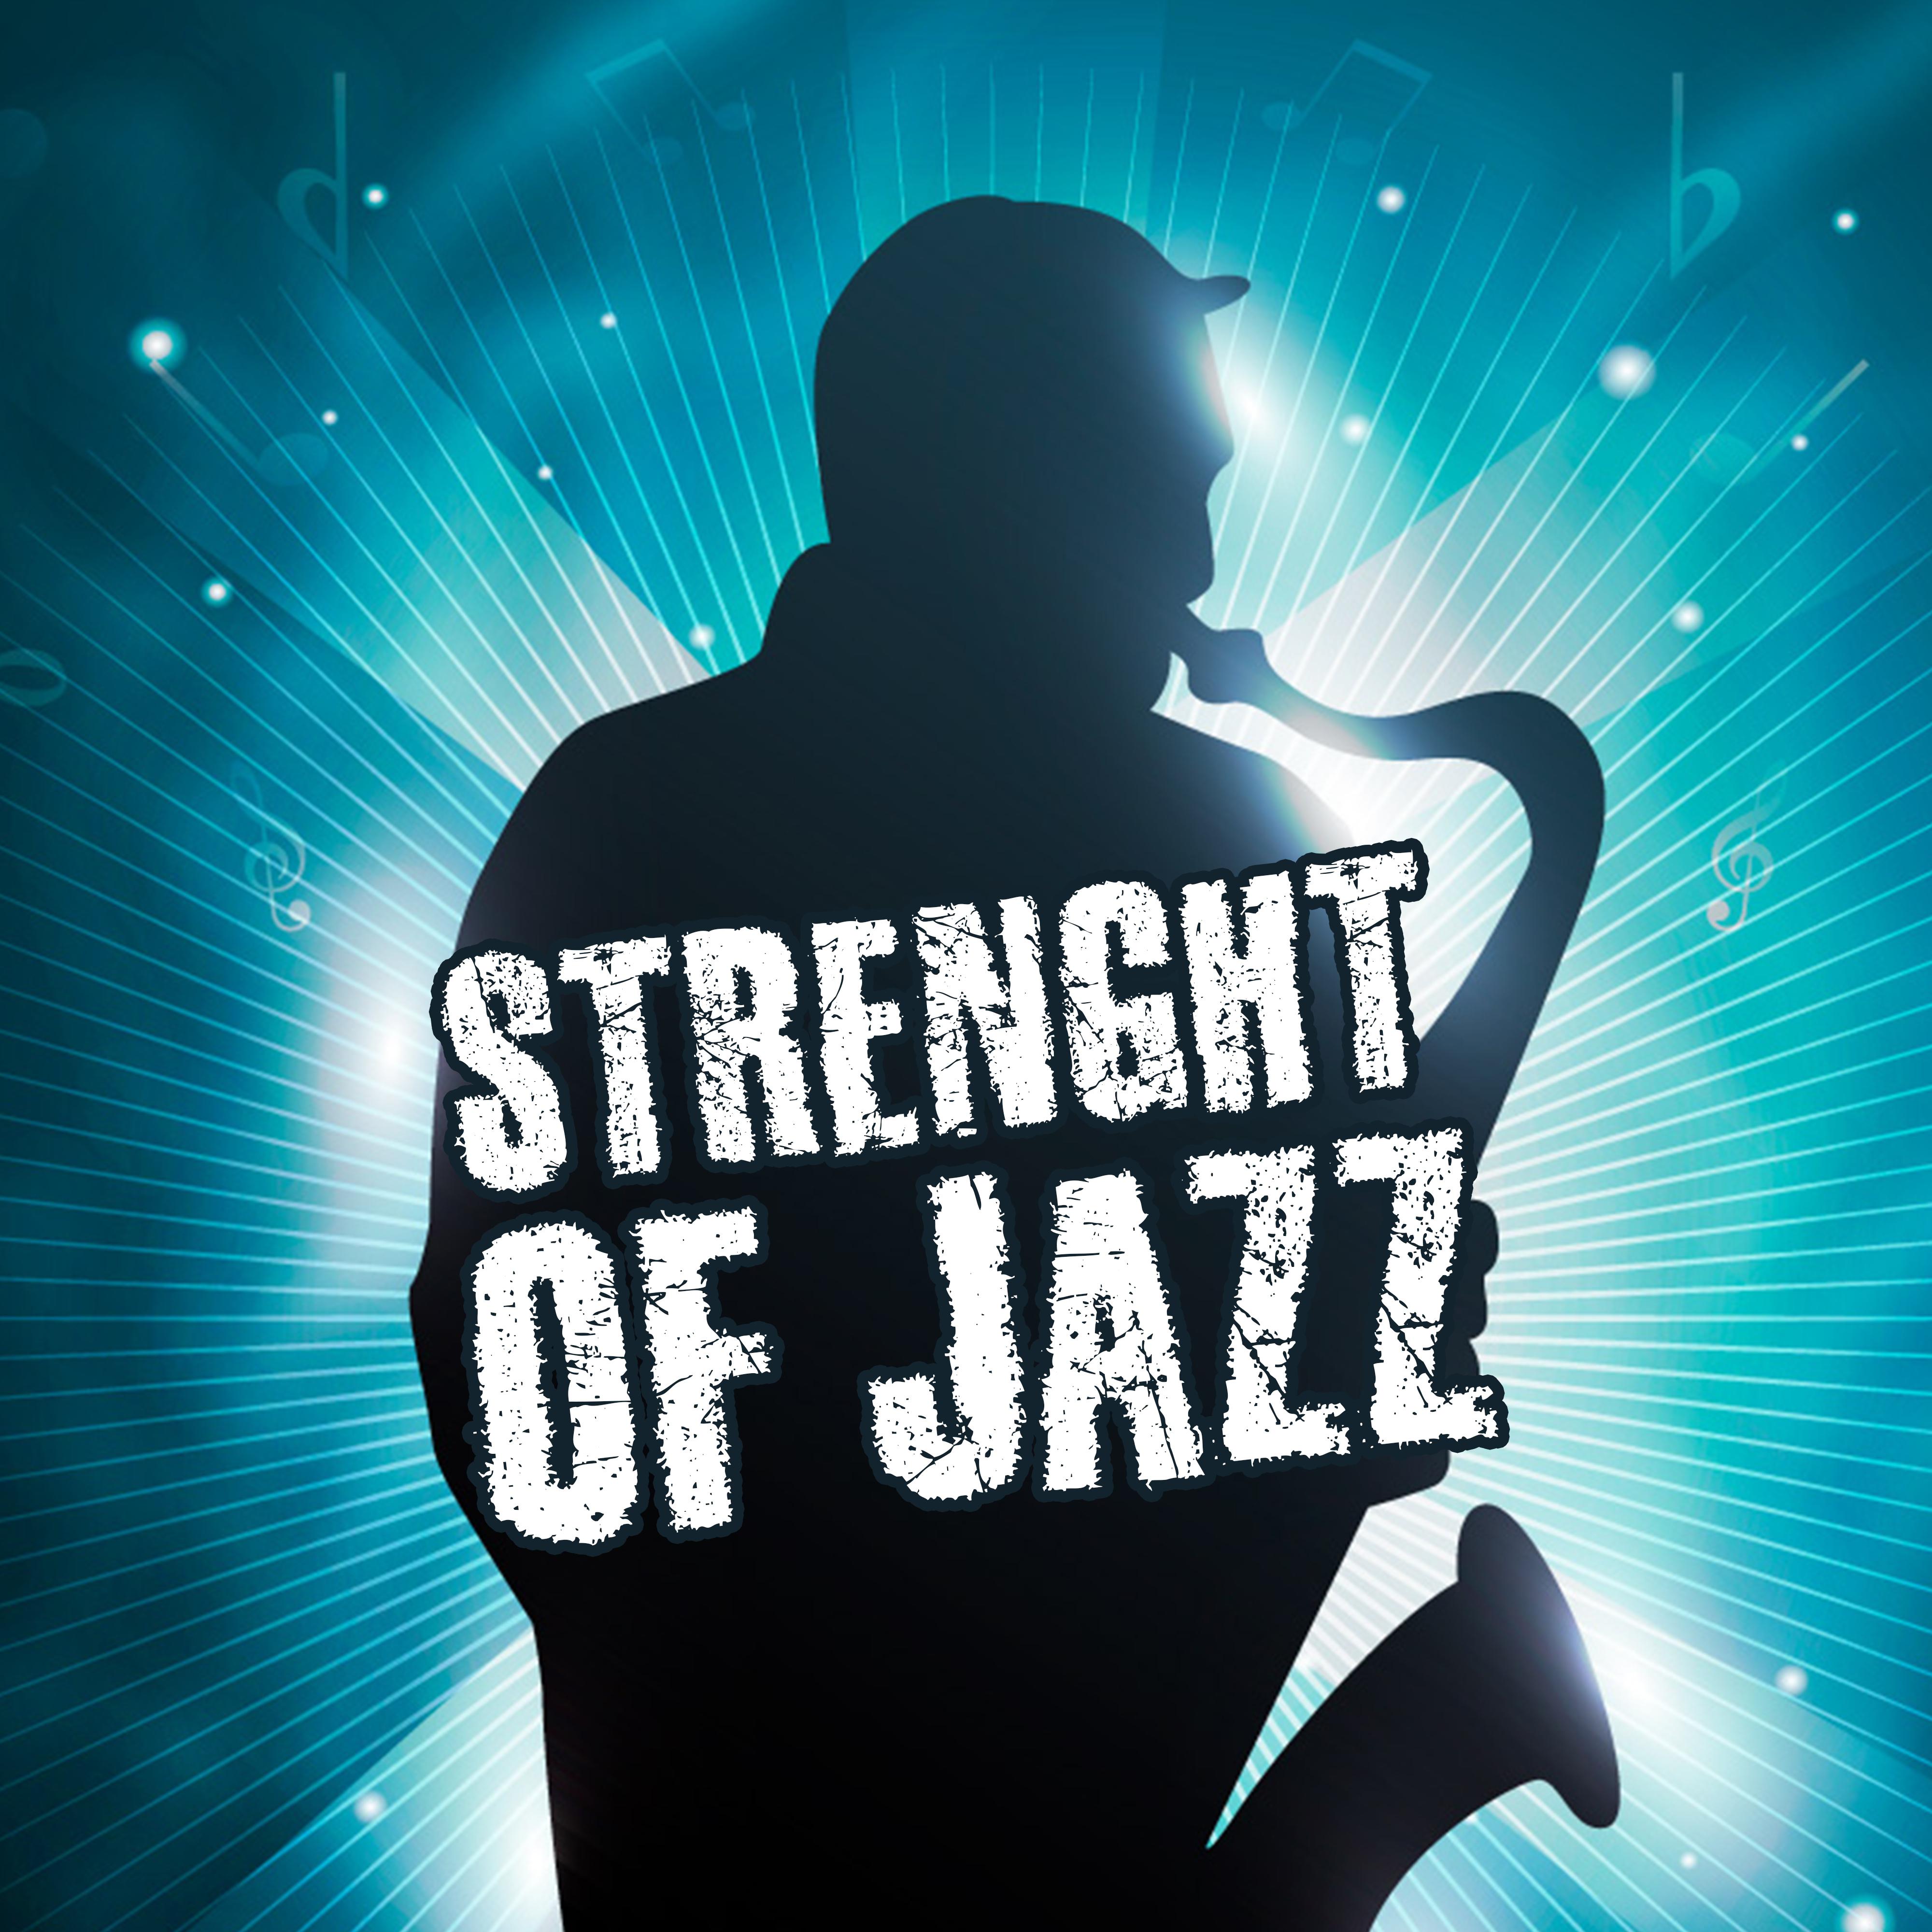 Strenght of Jazz